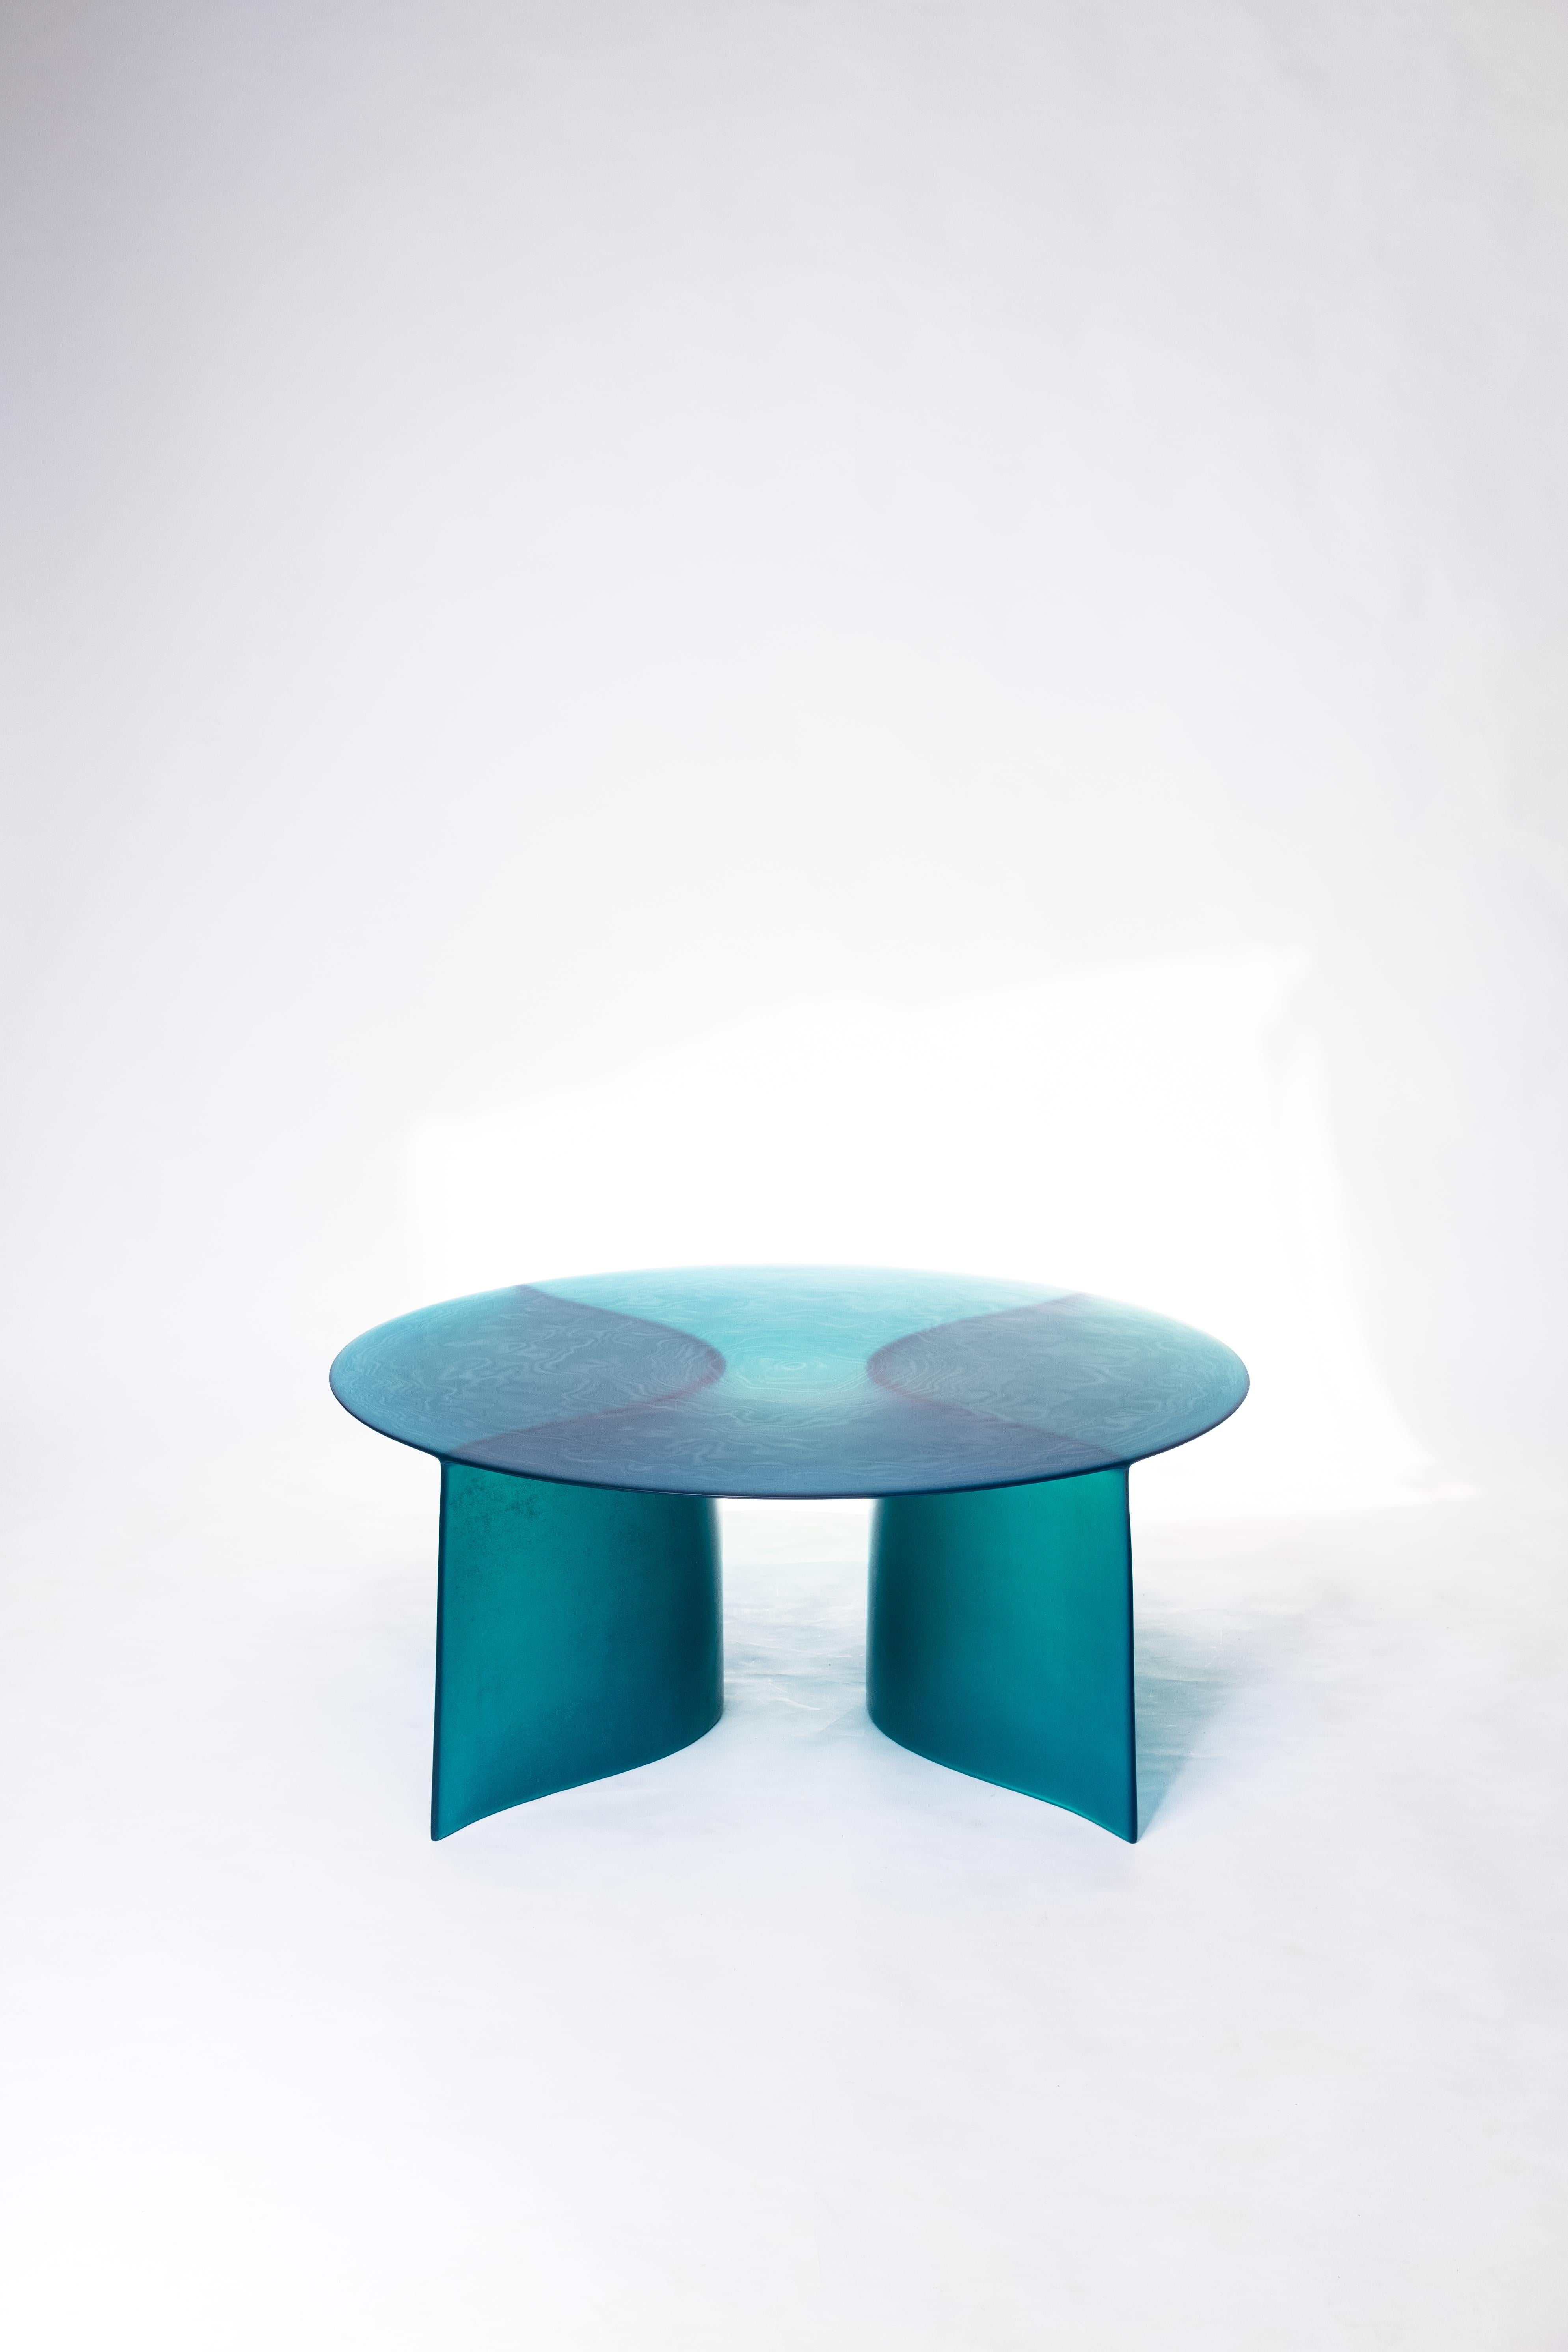 Néerlandais Contemporary Blue Fiberglass, New Wave Coffee Table Round 120cm, by Lukas Cober